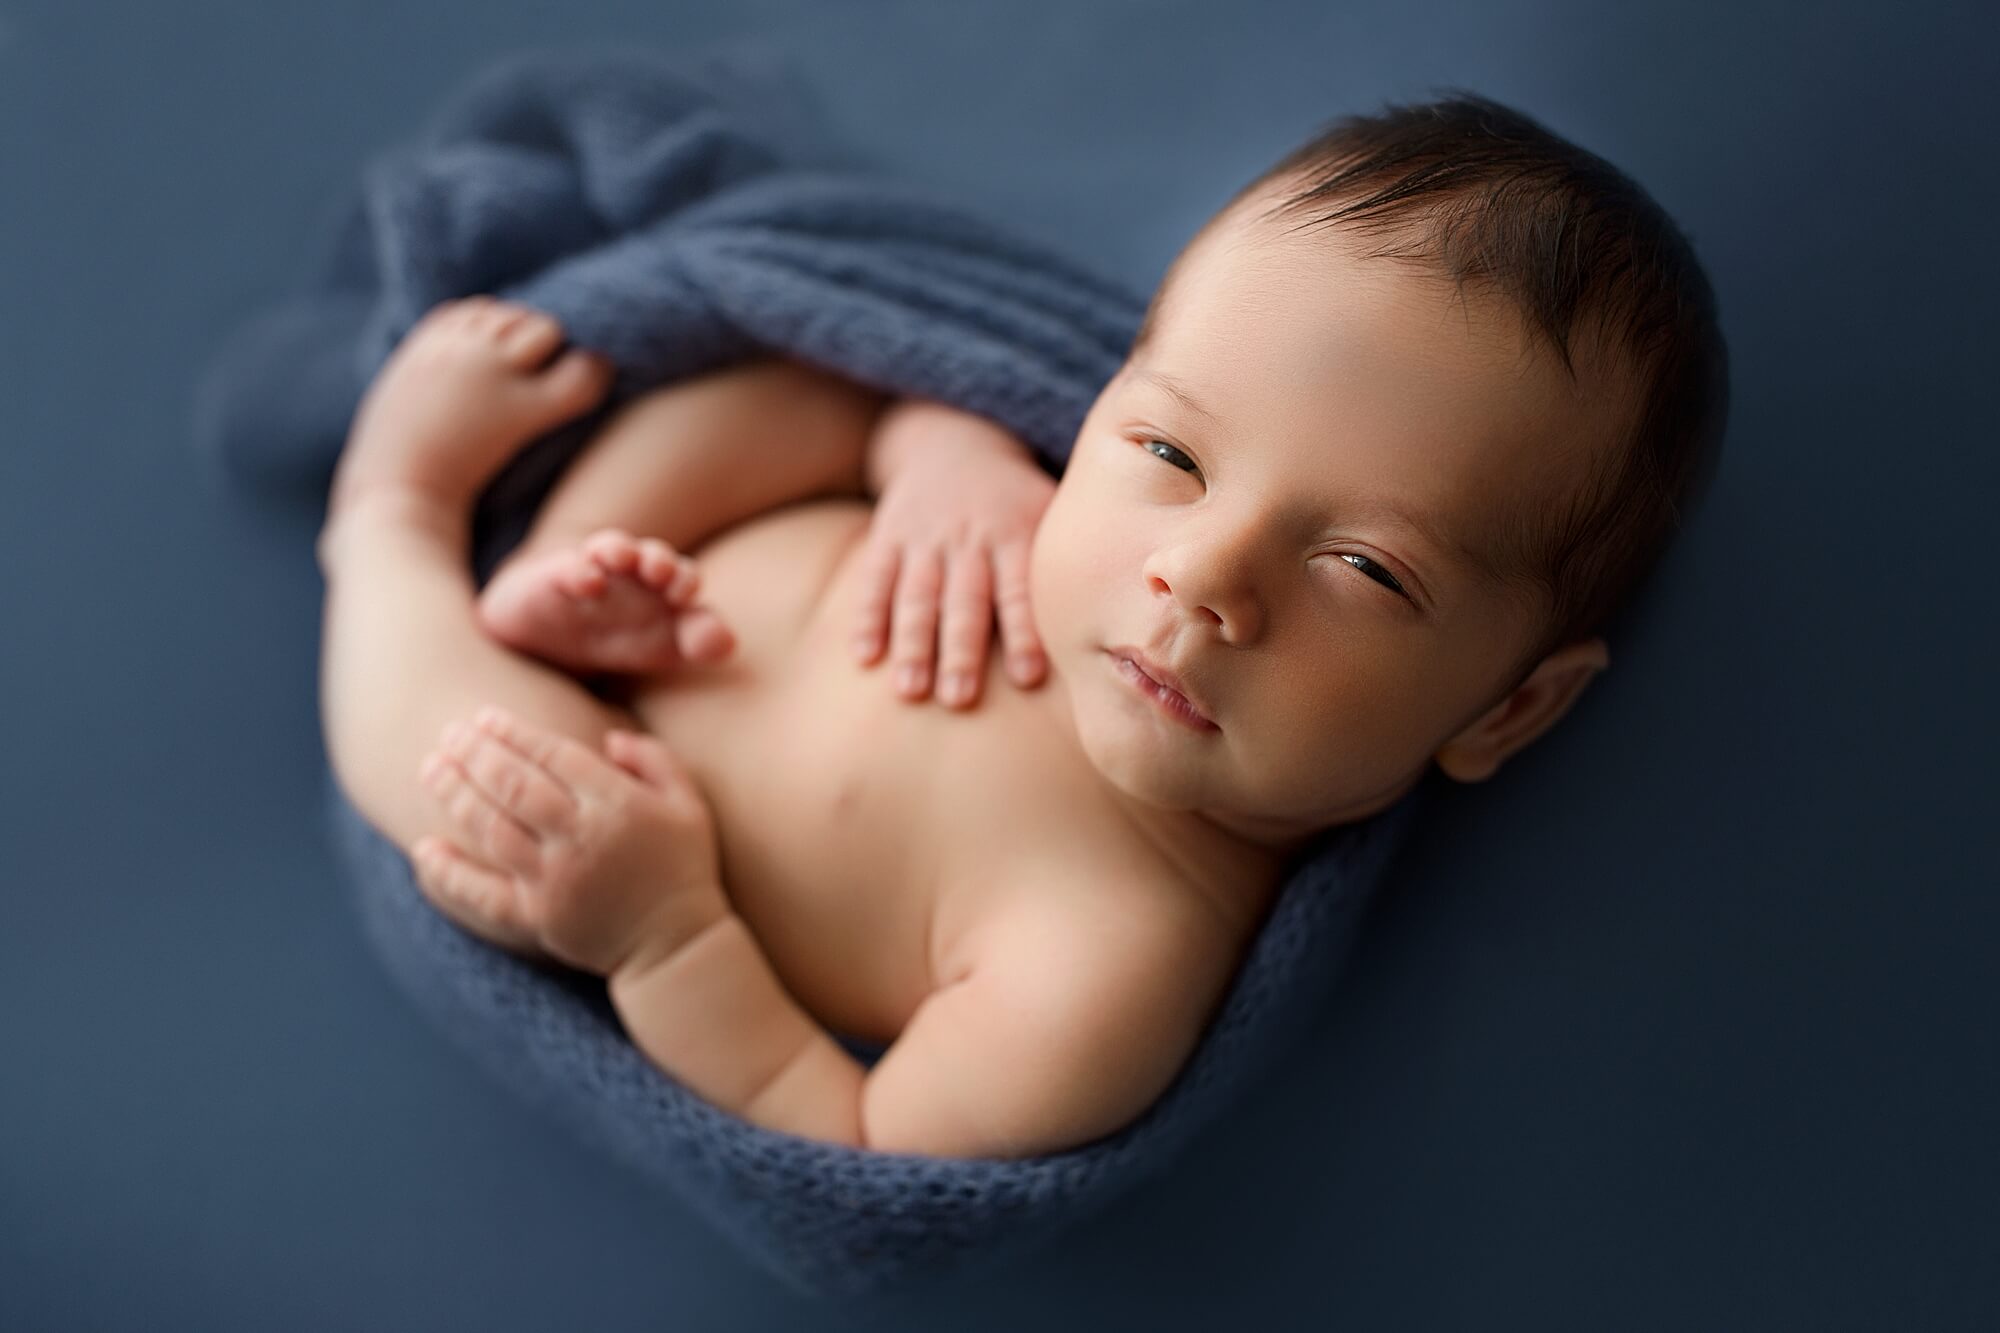 seattle area newborn photographer - baby boy photo session